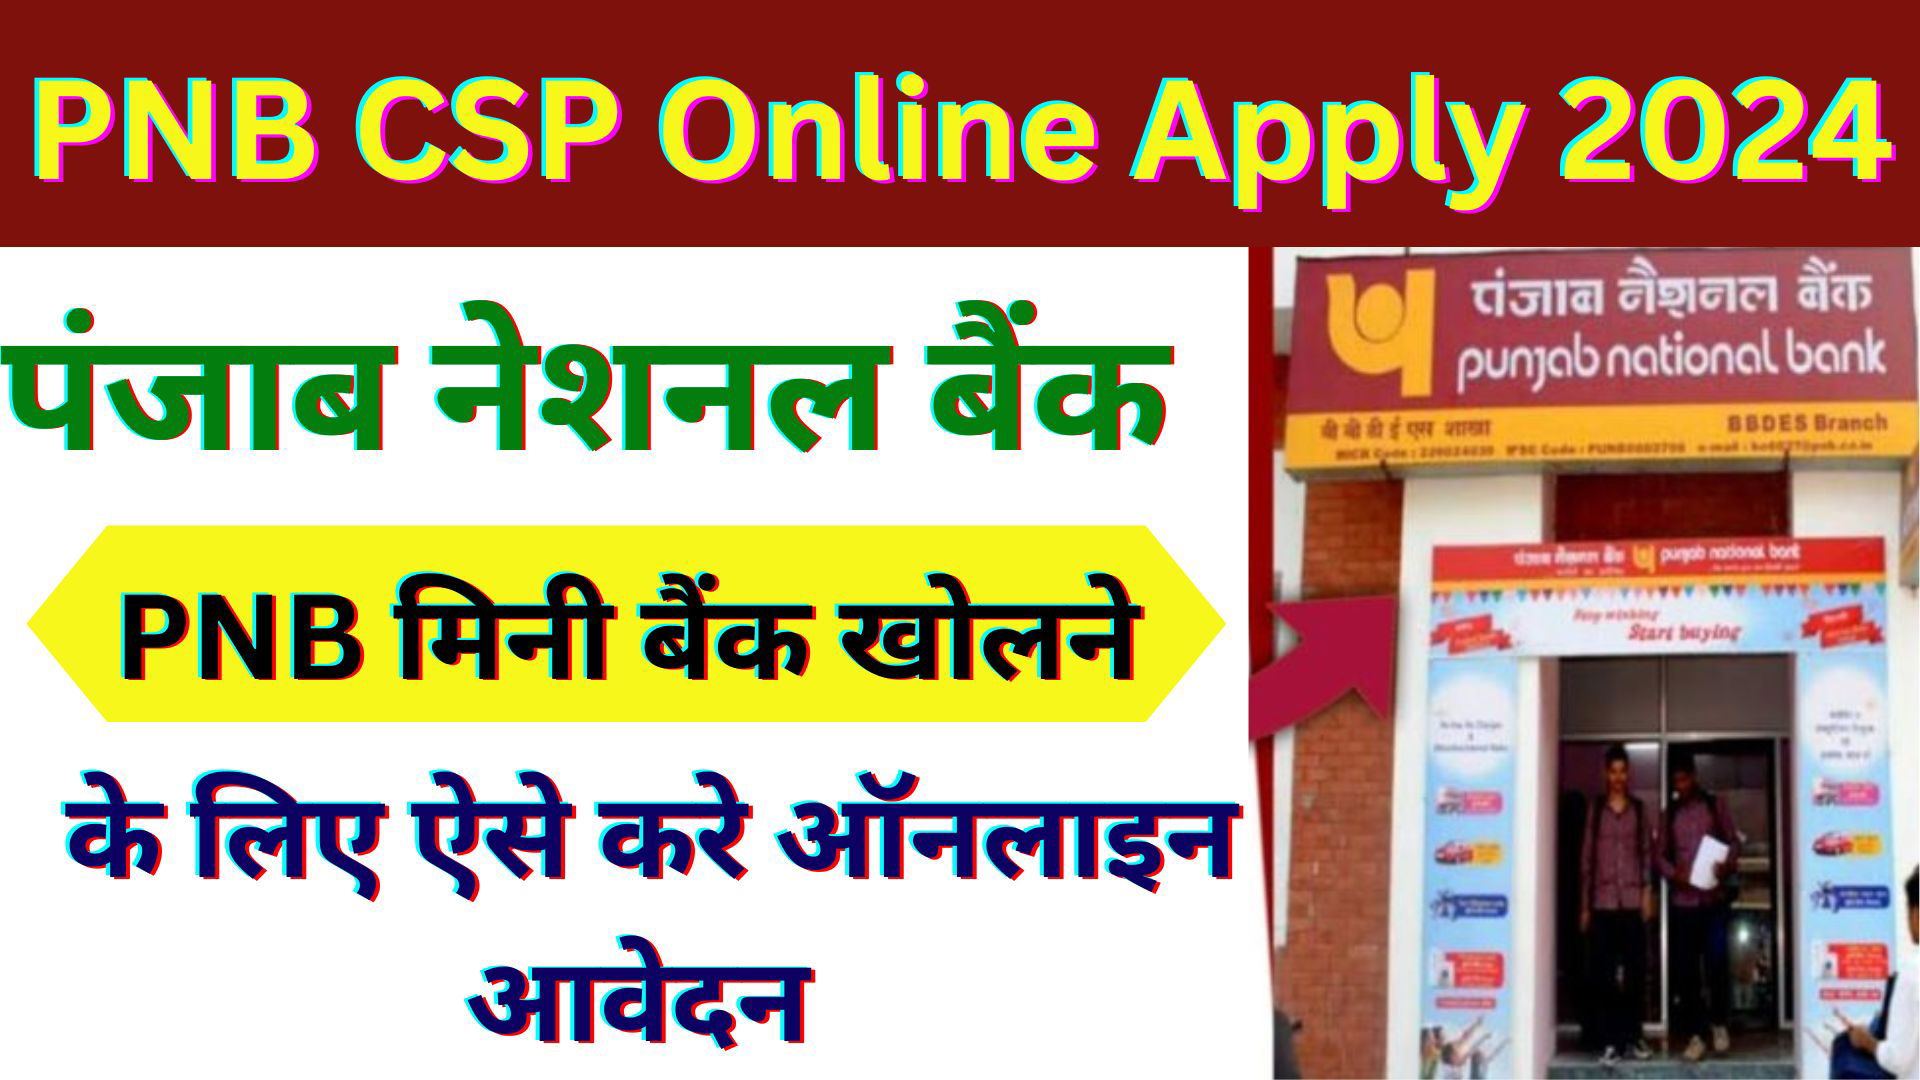 PNB CSP Online Apply 2024: PNB Bank CSP Kaise Khole 2023 : PNB मिनी बैंक खोलने के लिए ऐसे करे ऑनलाइन आवेदन